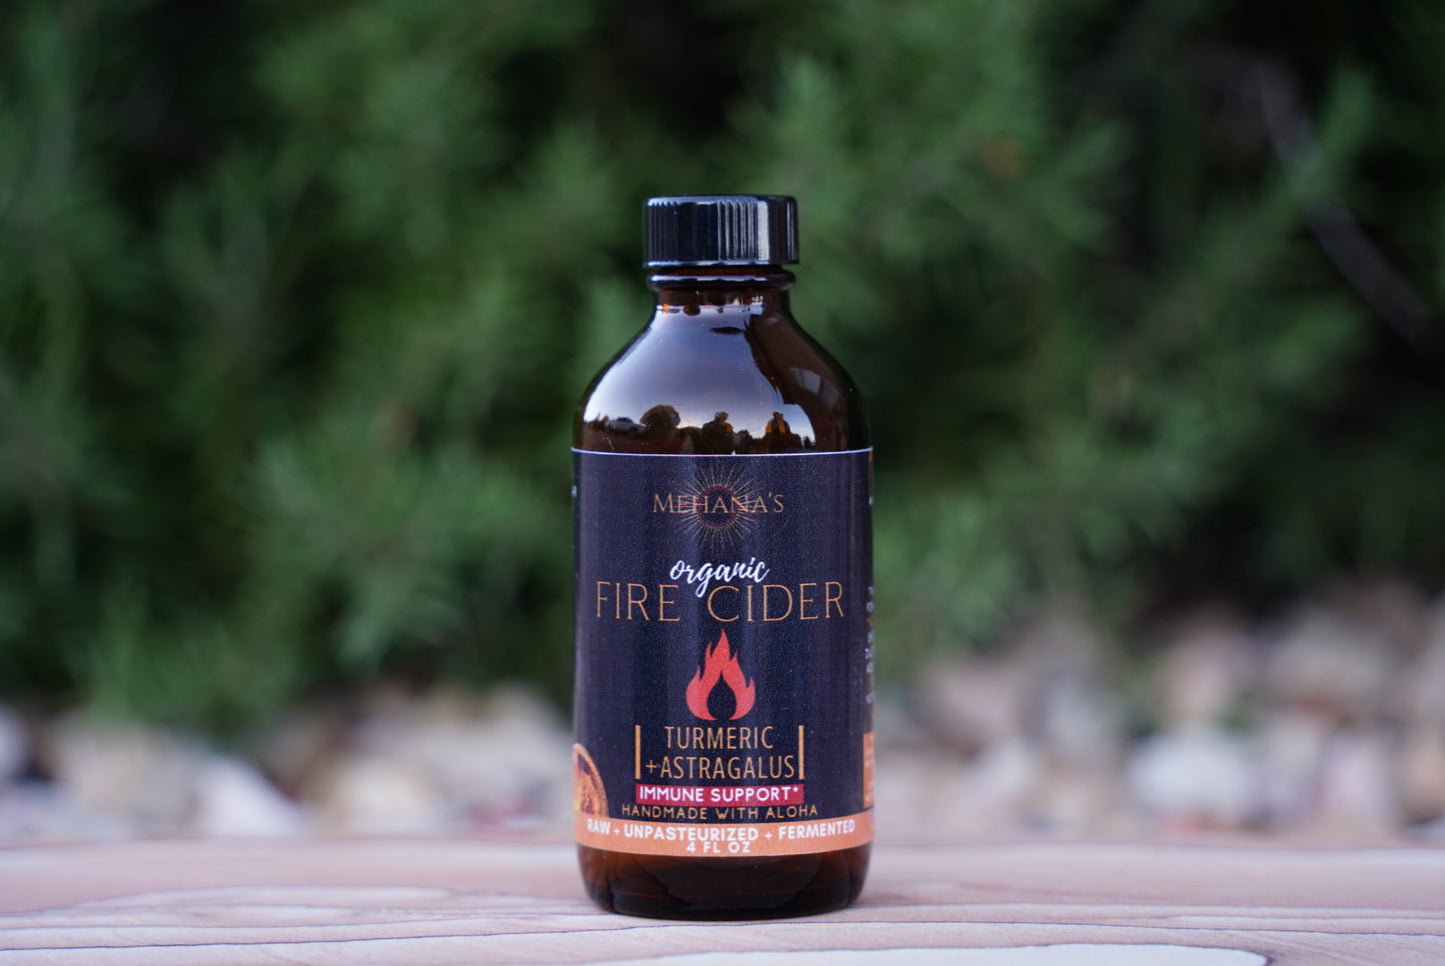 Turmeric + Astragalus Fire Cider